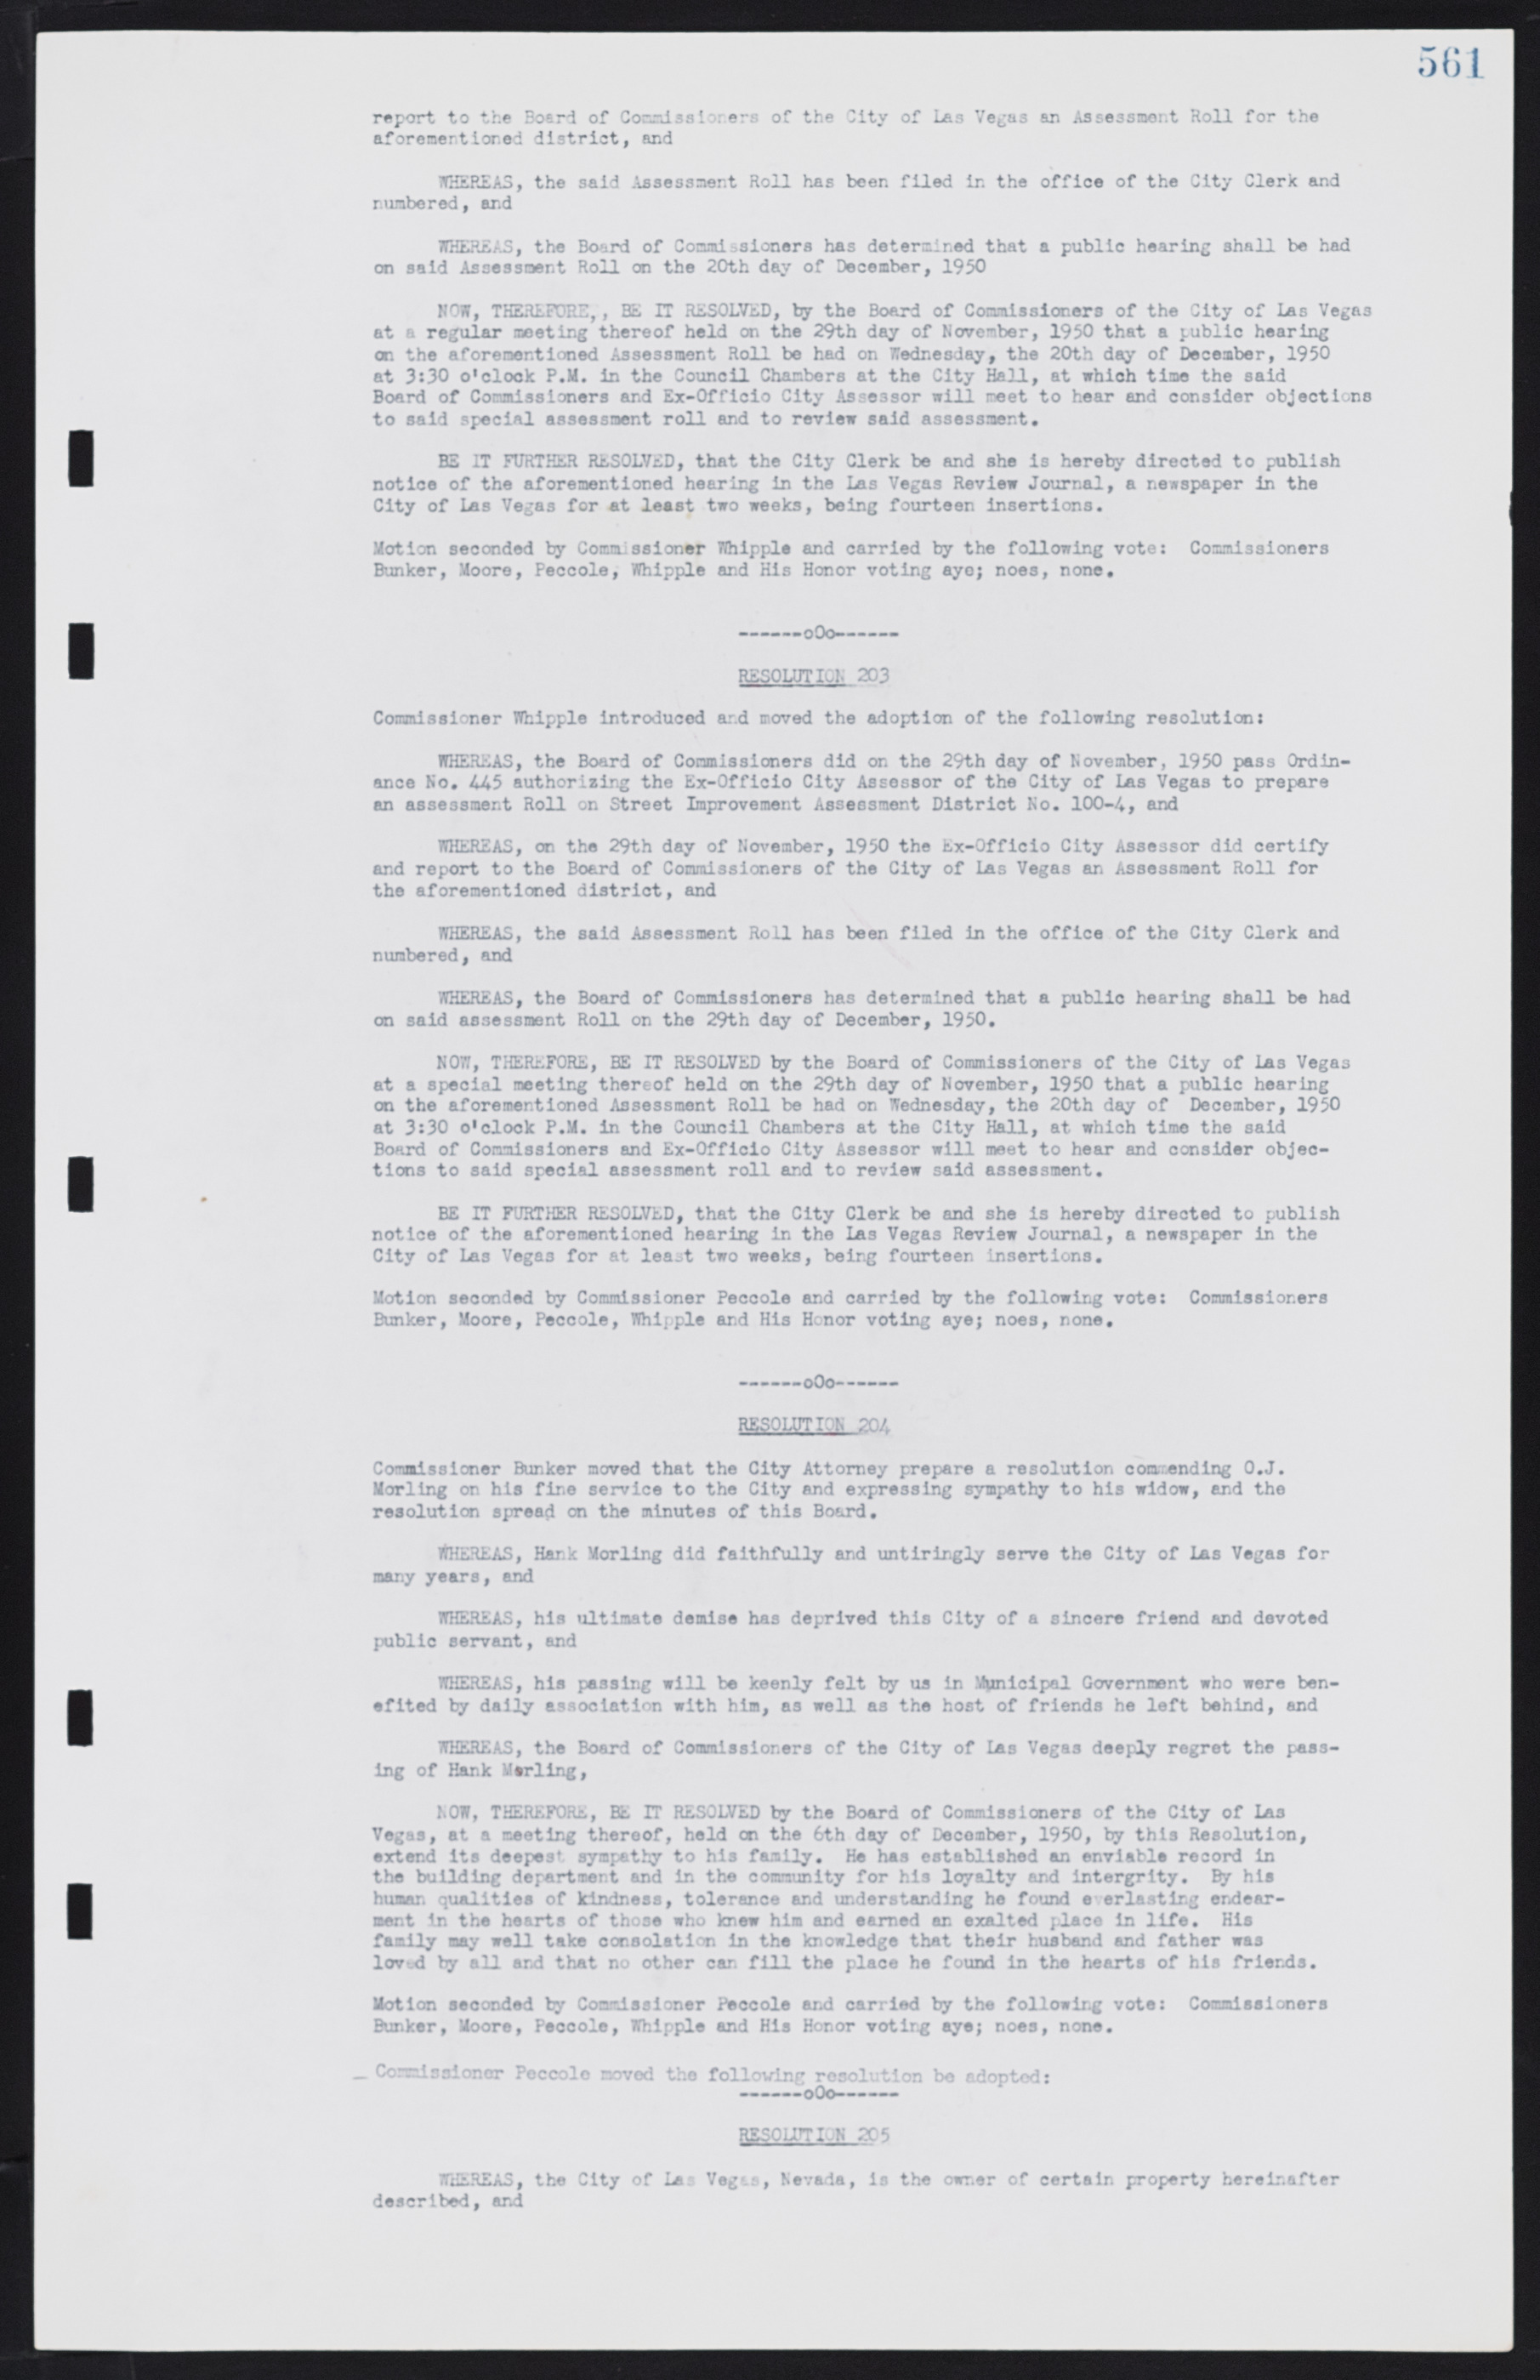 Las Vegas City Commission Minutes, January 7, 1947 to October 26, 1949, lvc000006-592